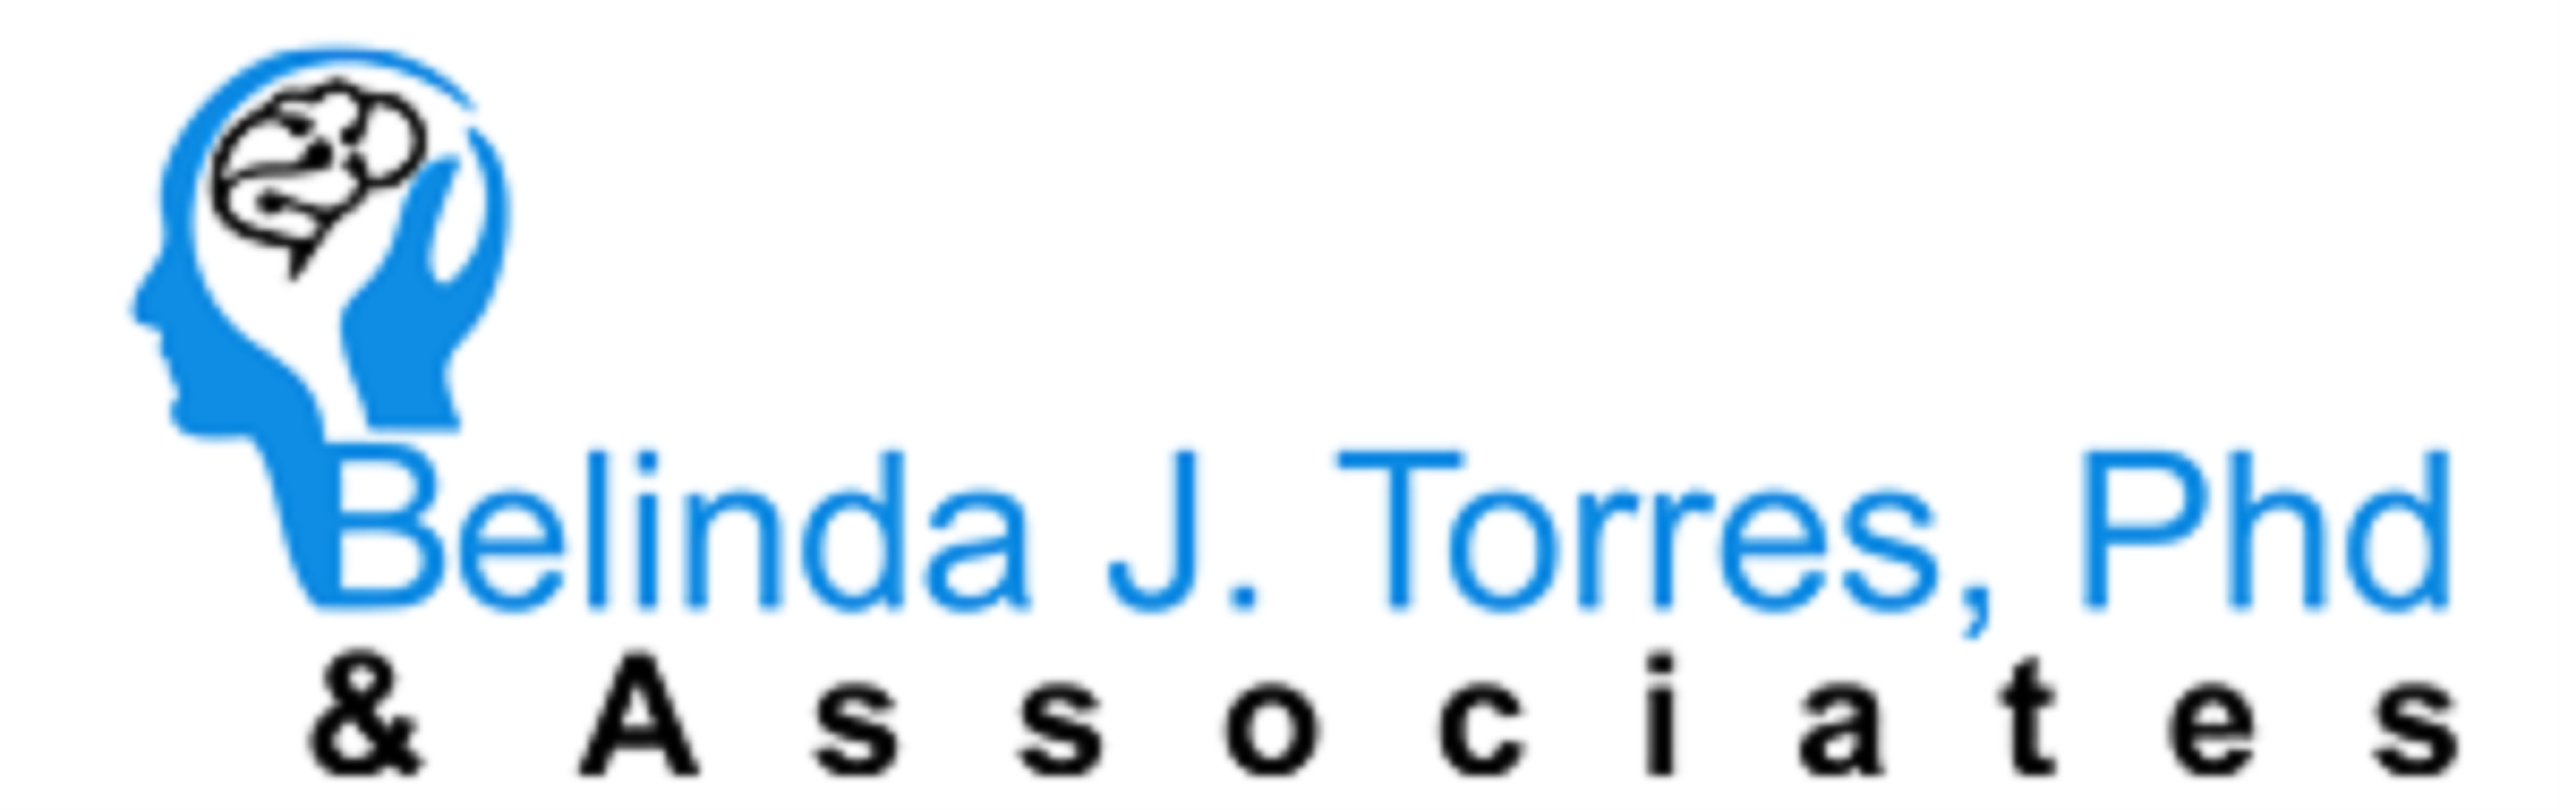 Belinda J. Torres, PhD & Associates Logo